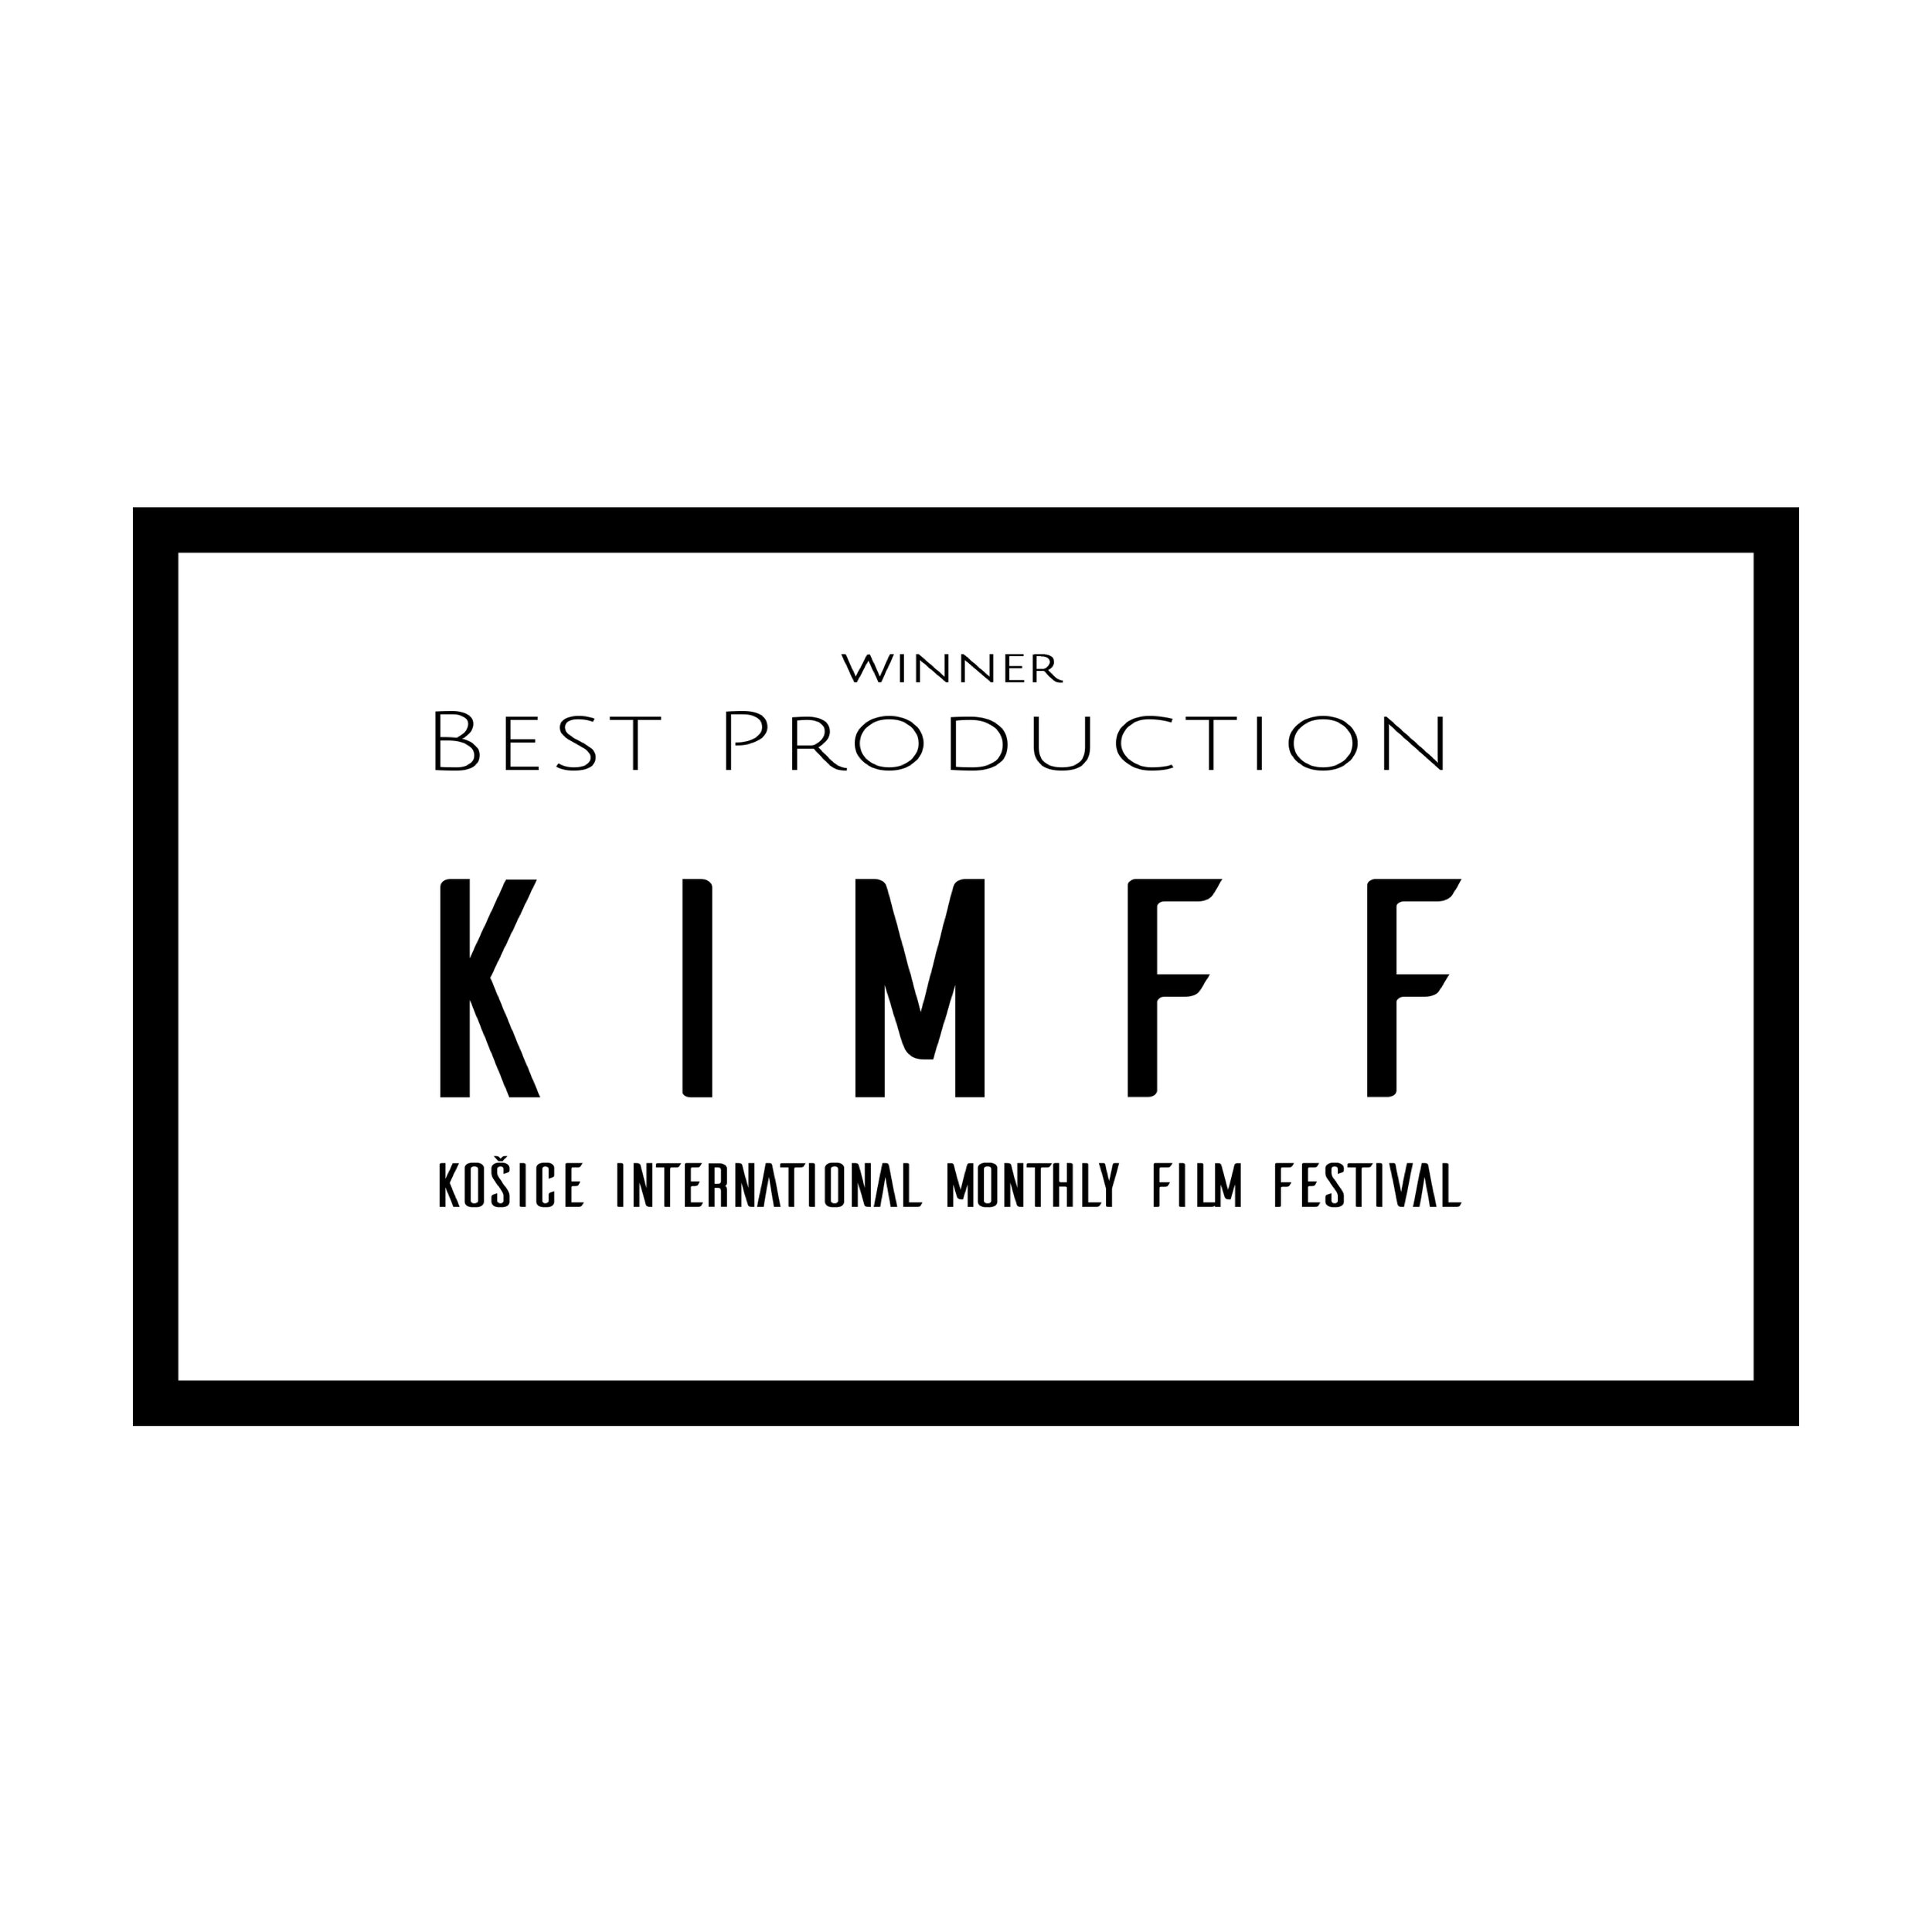 KIMFF_Best_Production_BLACK_WINNER_SQUARE.jpg